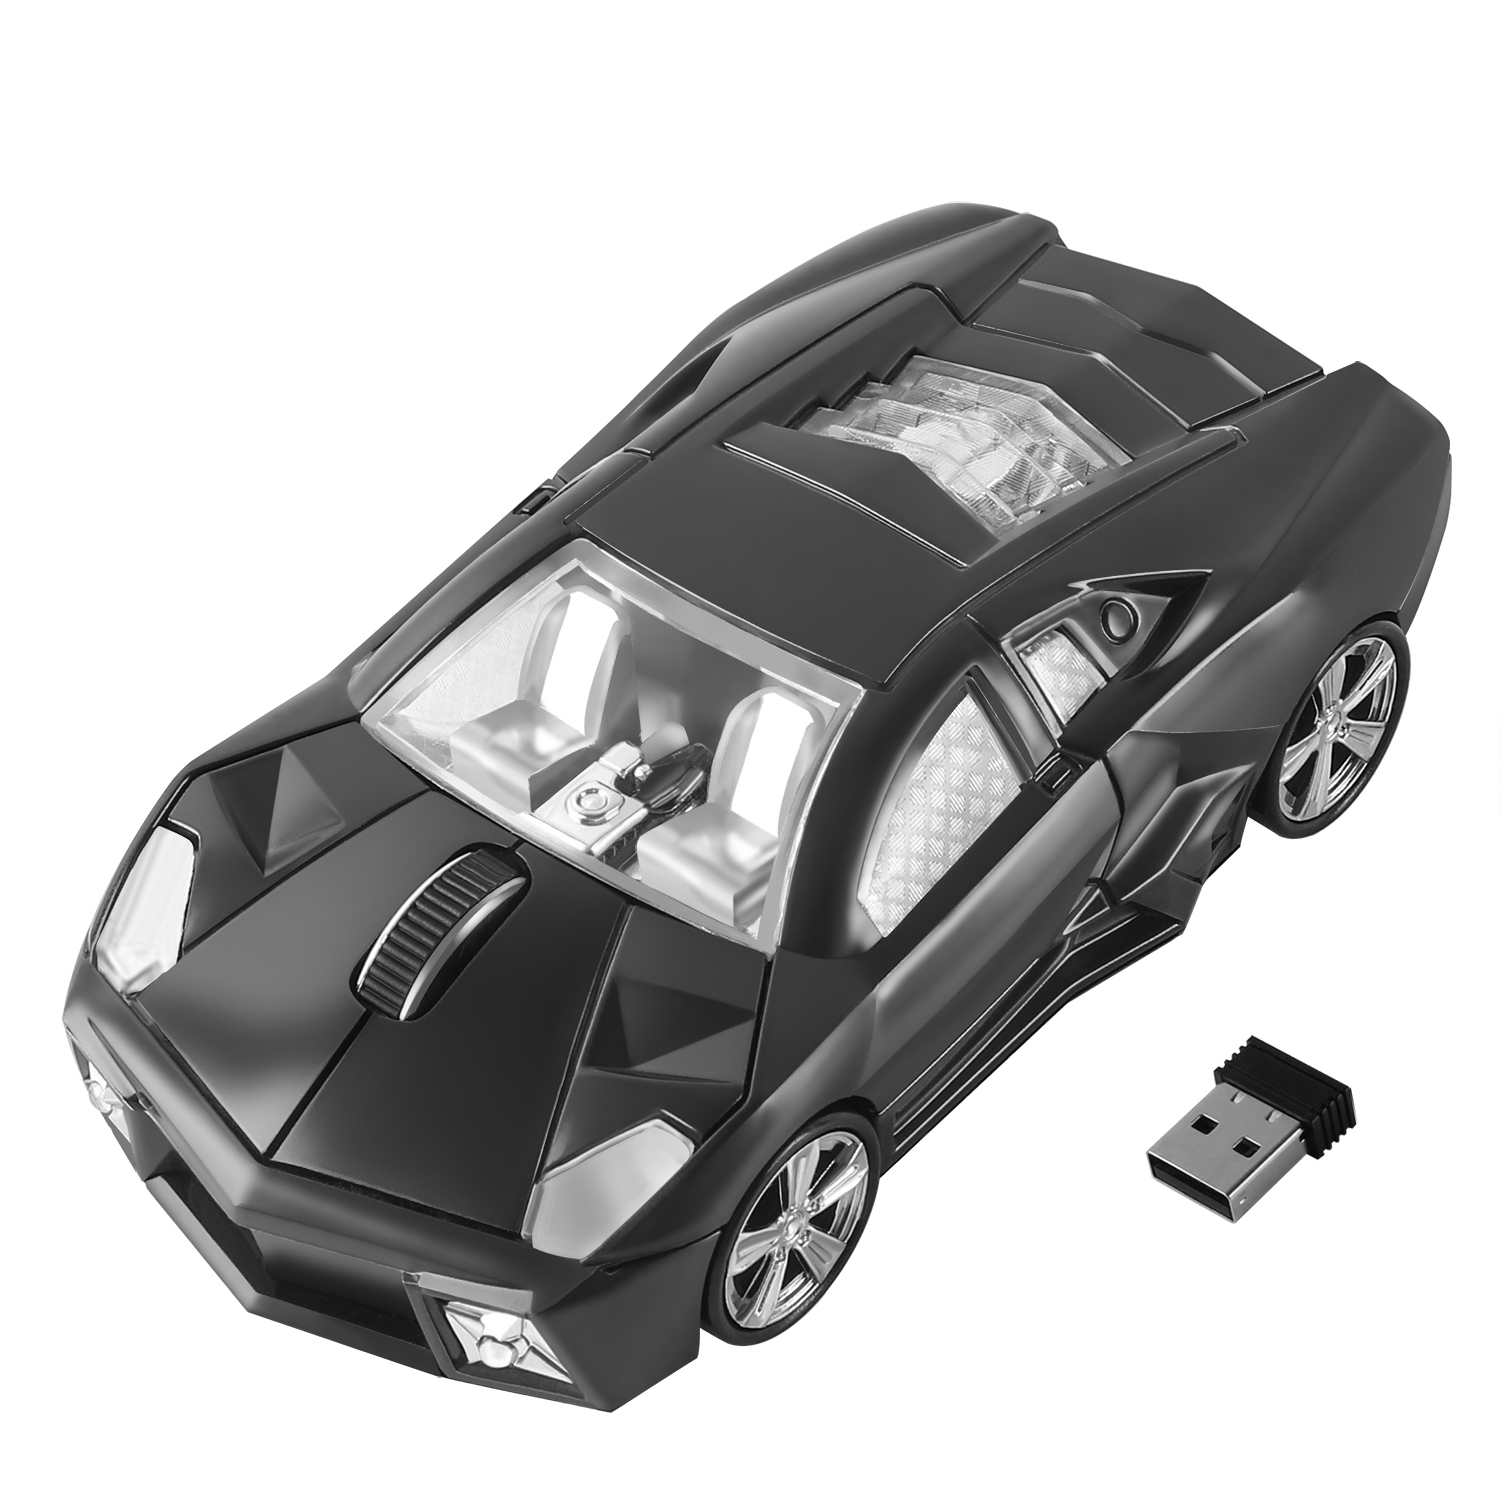 2-4G-Wireless-Mous-Ergonomic Ludi-Car-Design-Muse-Muse-1600-DPI-USB Optical Kids-Gift (9)